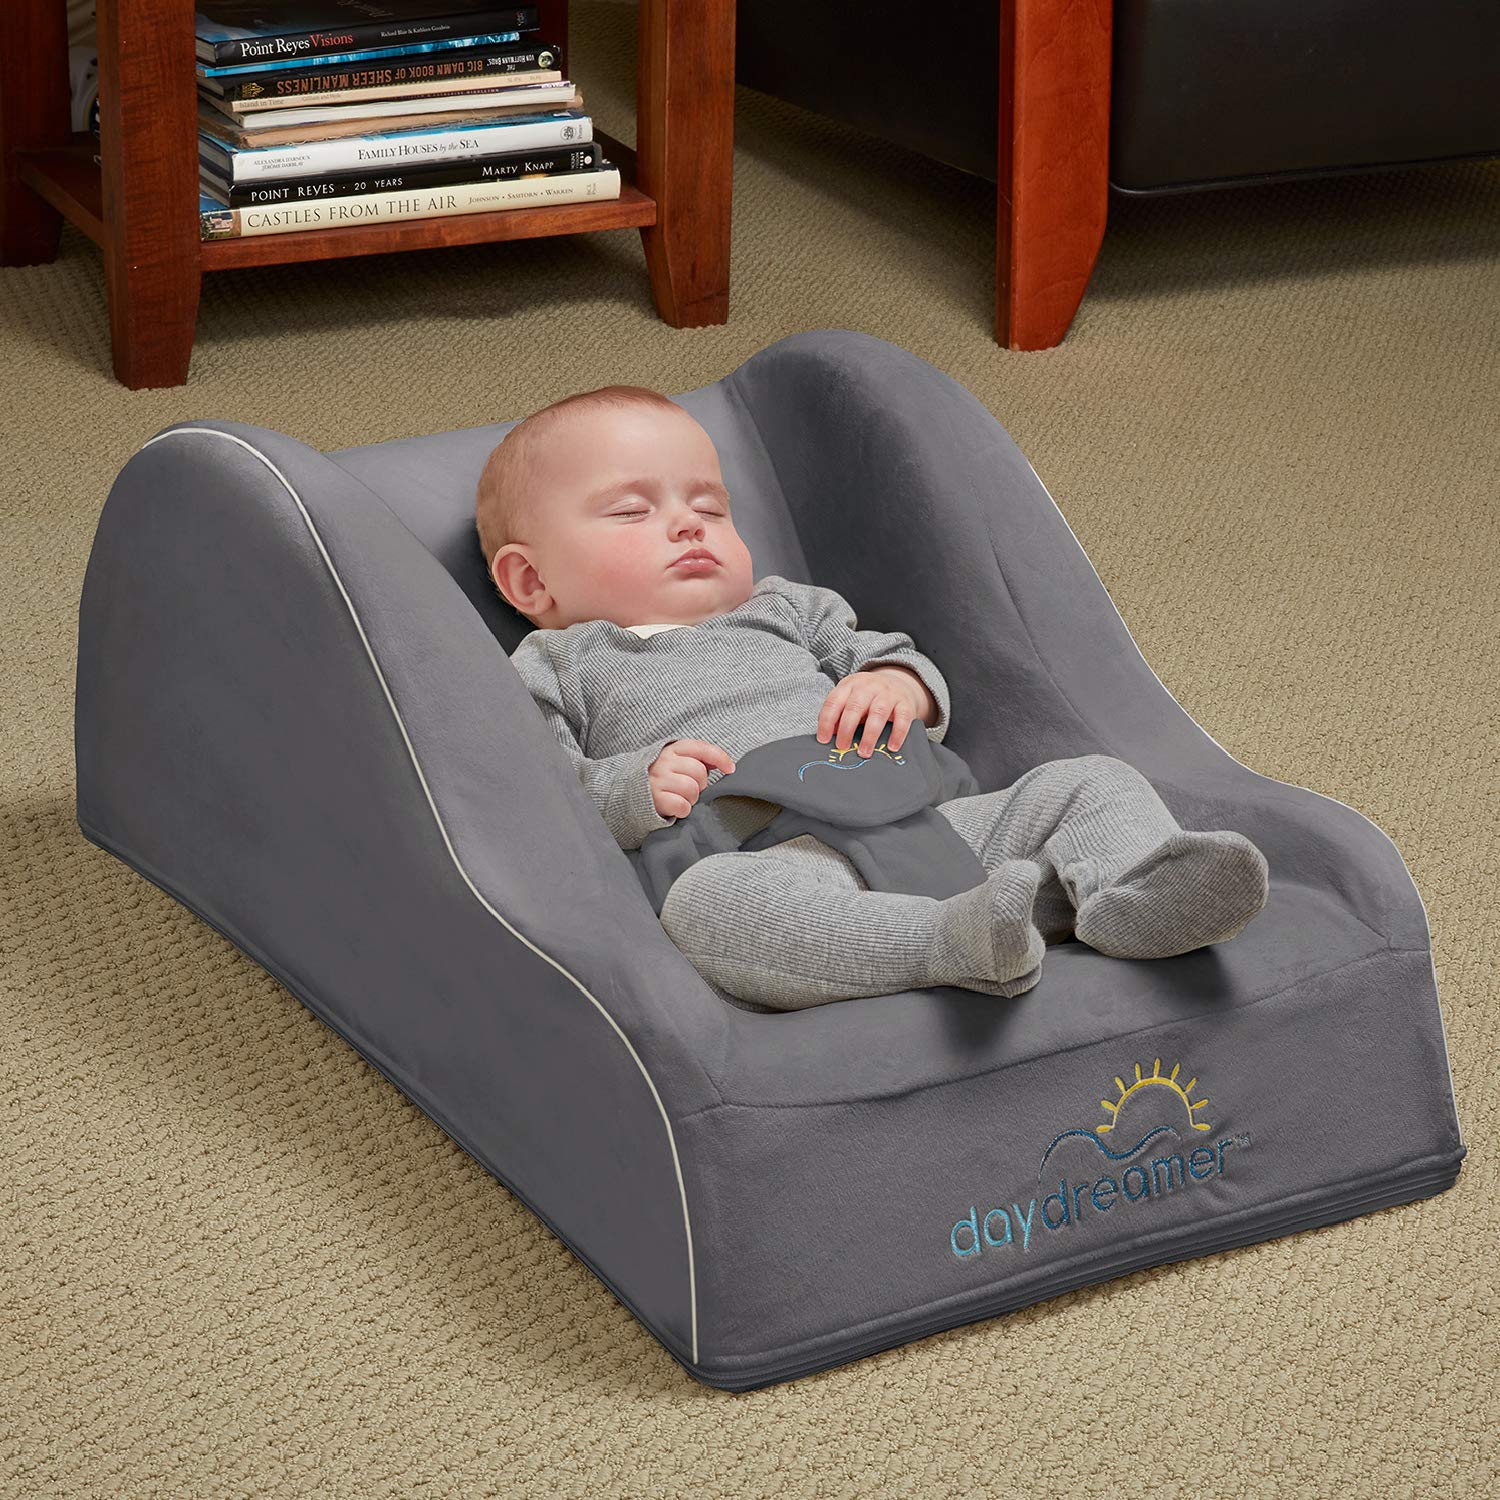 reflux baby chair